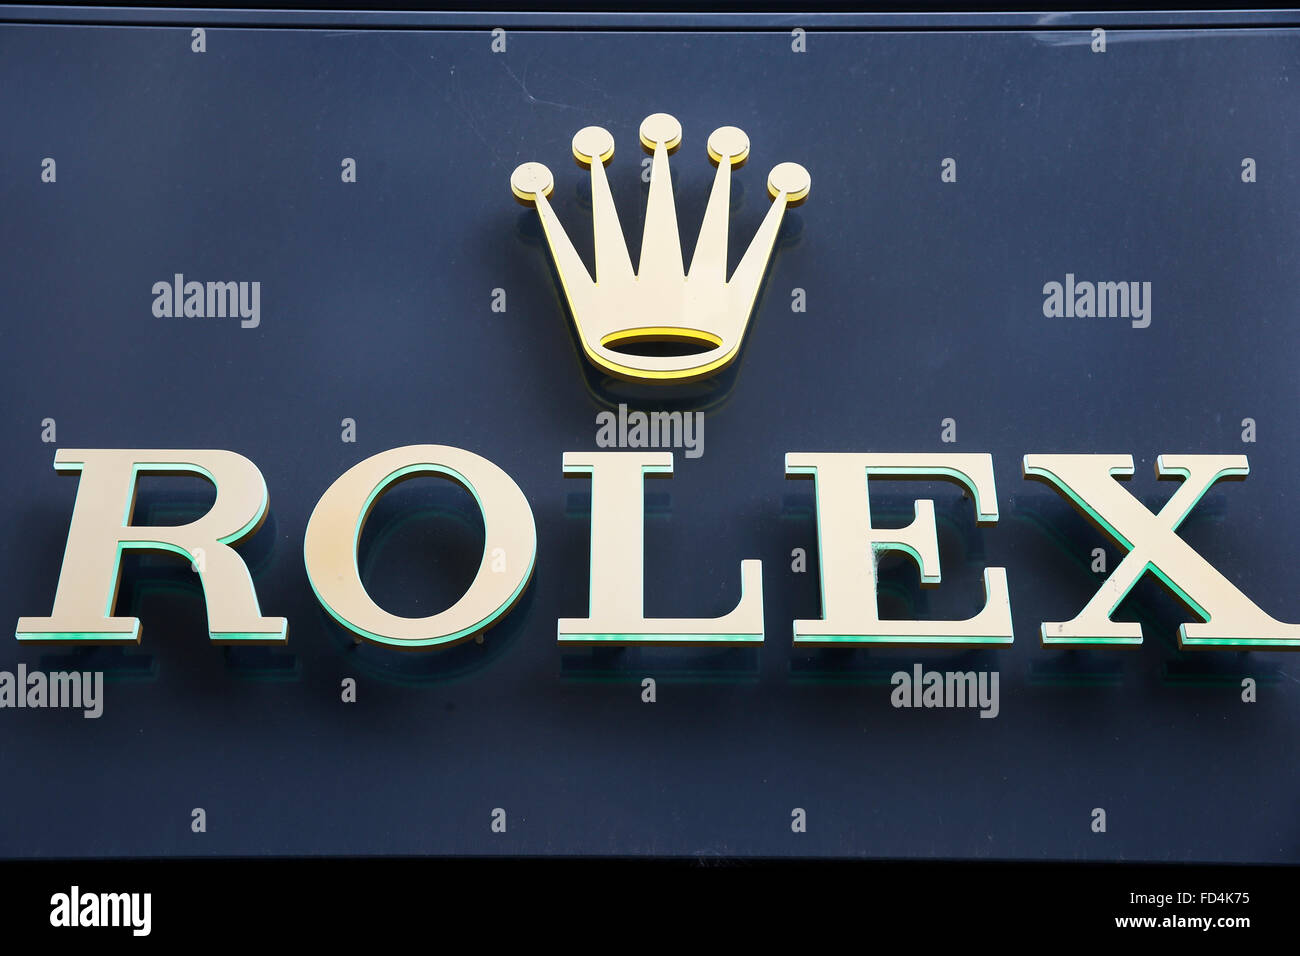 Rolex, luxury watch brand Foto Stock